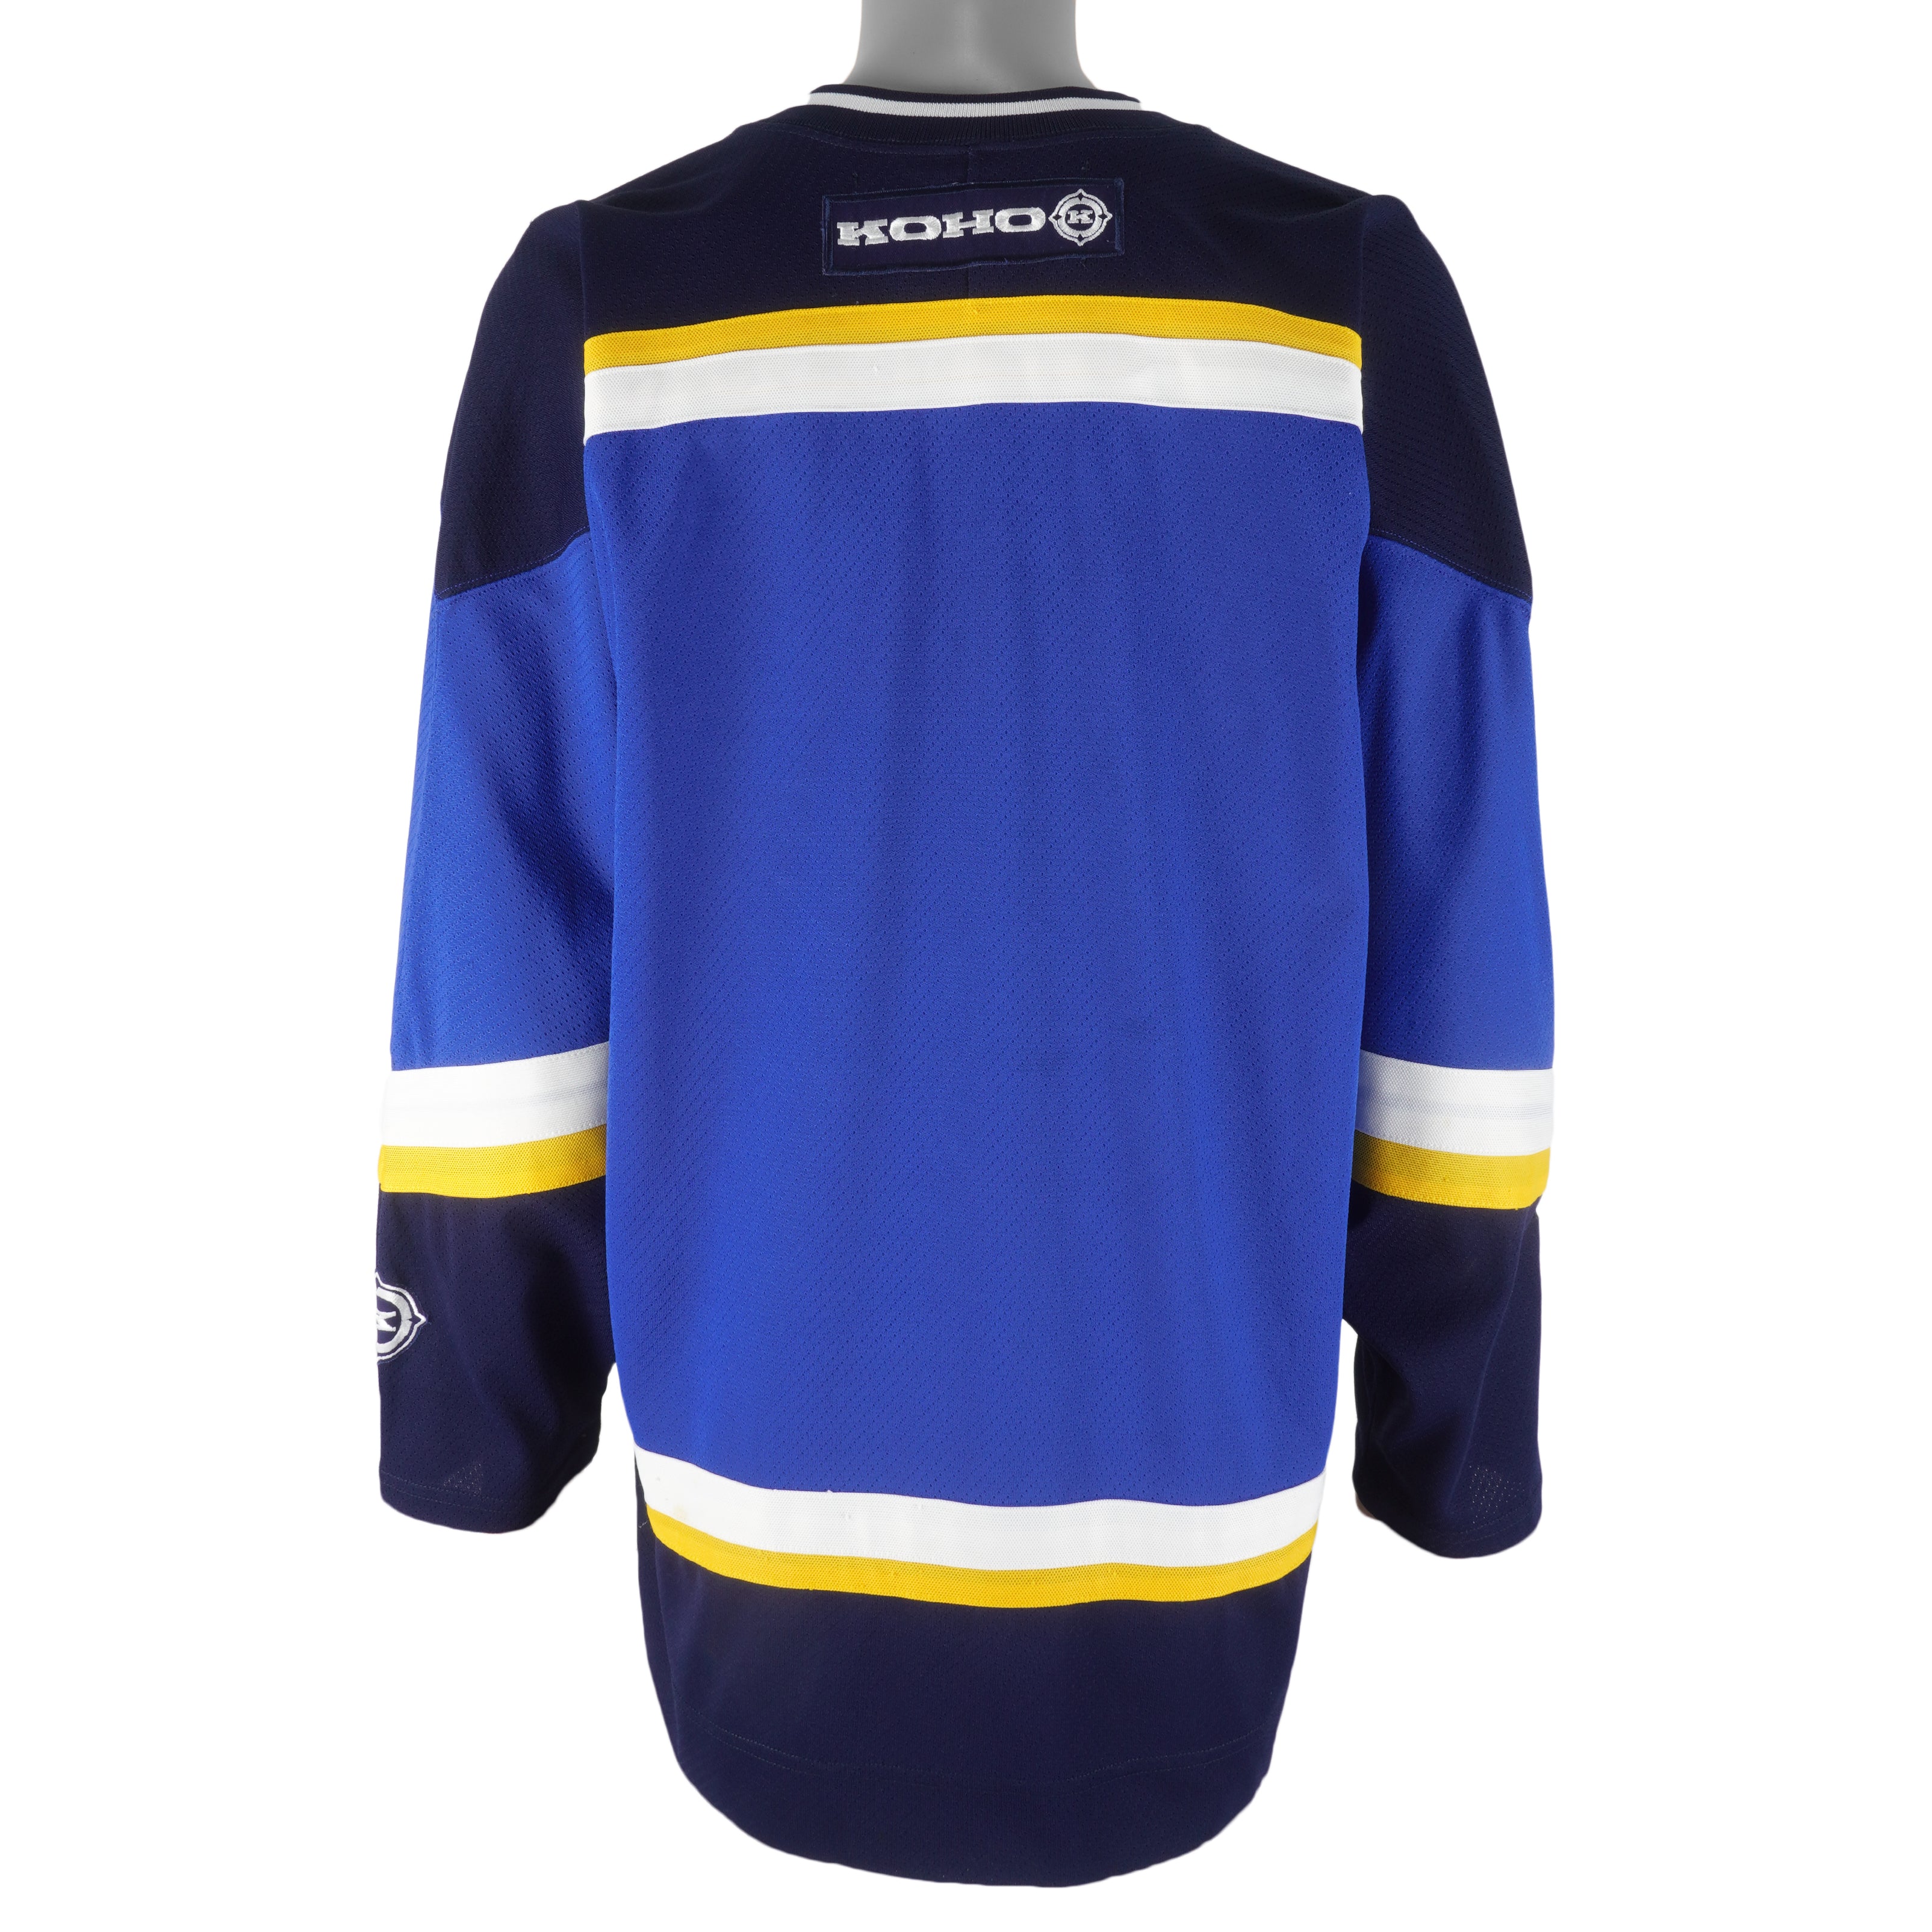 Vintage 1993 St.-Louis-Blues Shirt Large Blue NHL 90s Single-Stitch Tee